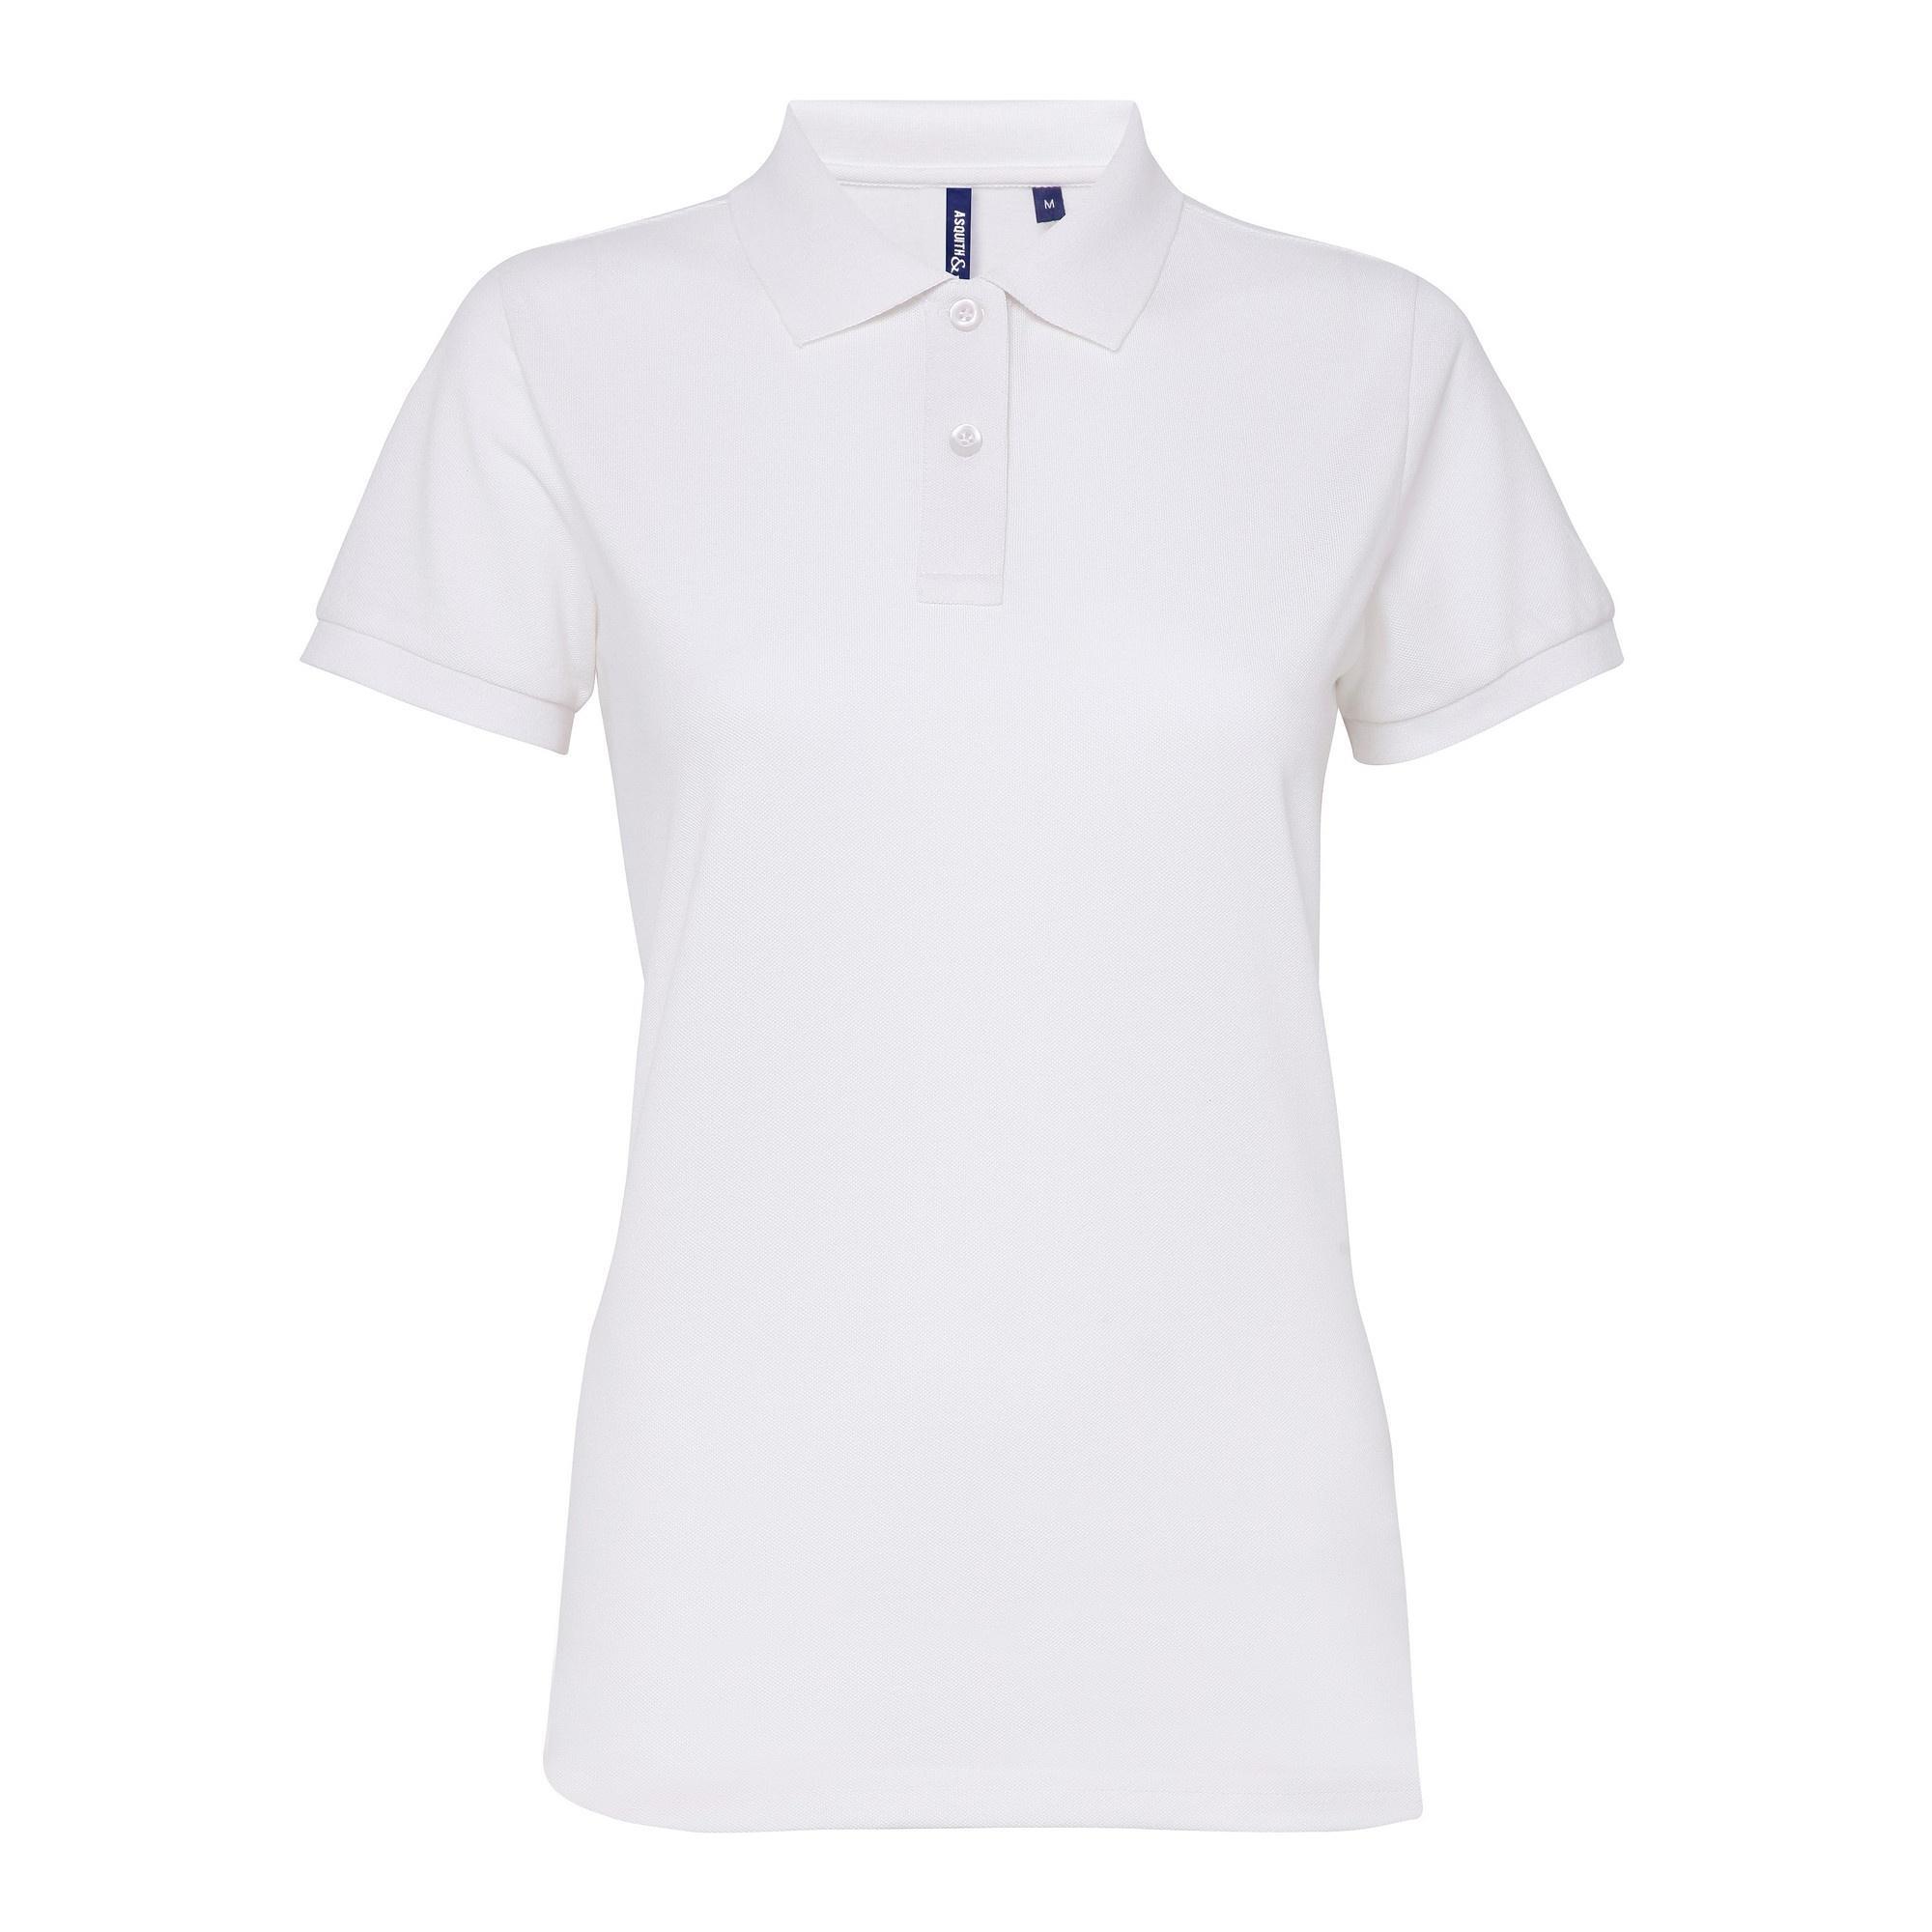 Asquith & Fox Womens/Ladies Short Sleeve Performance Blend Polo Shirt (White) (XL)